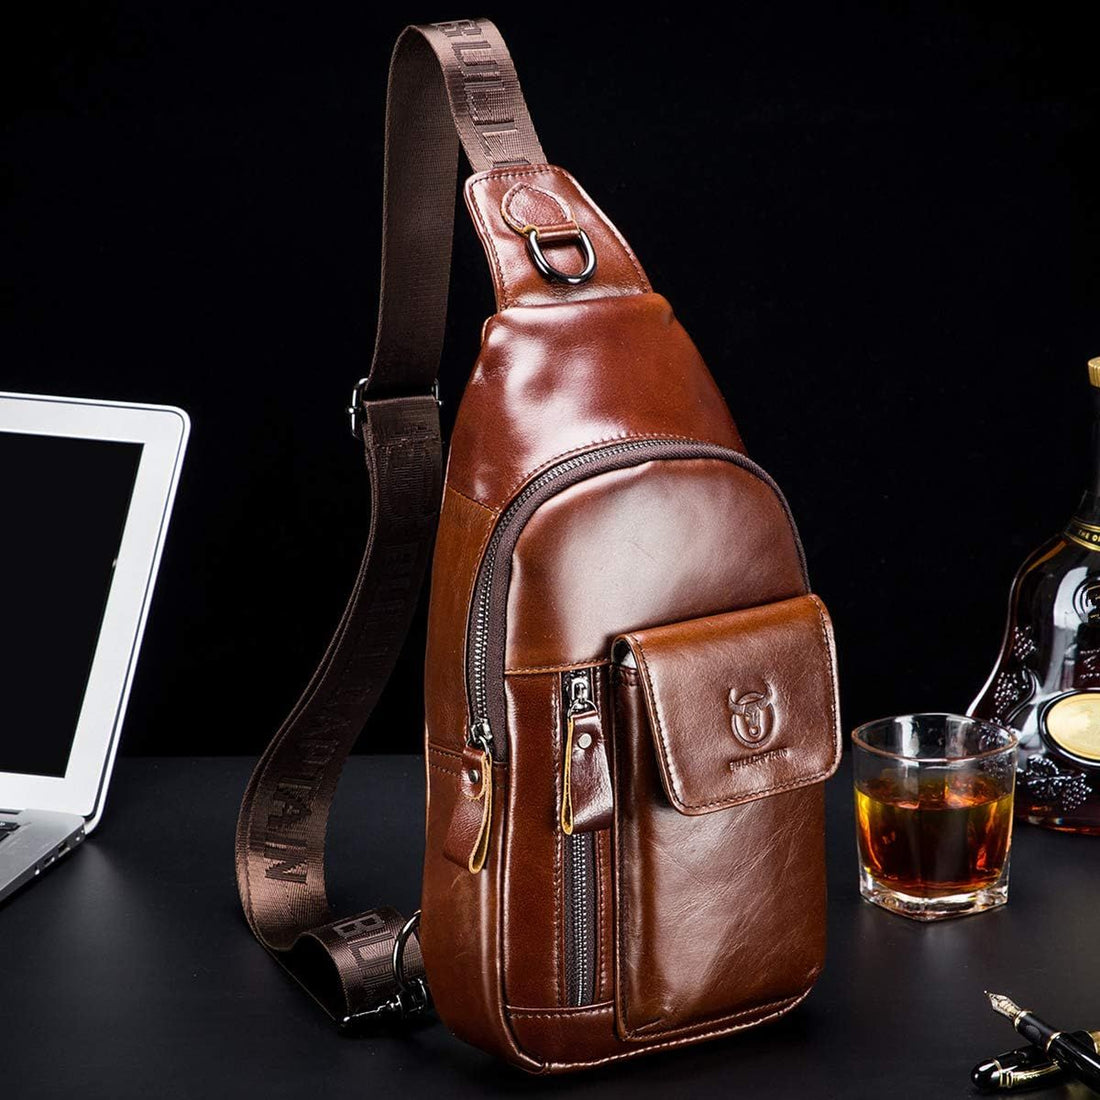 Genuine Leather Sling Bag Multi-pocket Chest Crossbody Daypack Bag